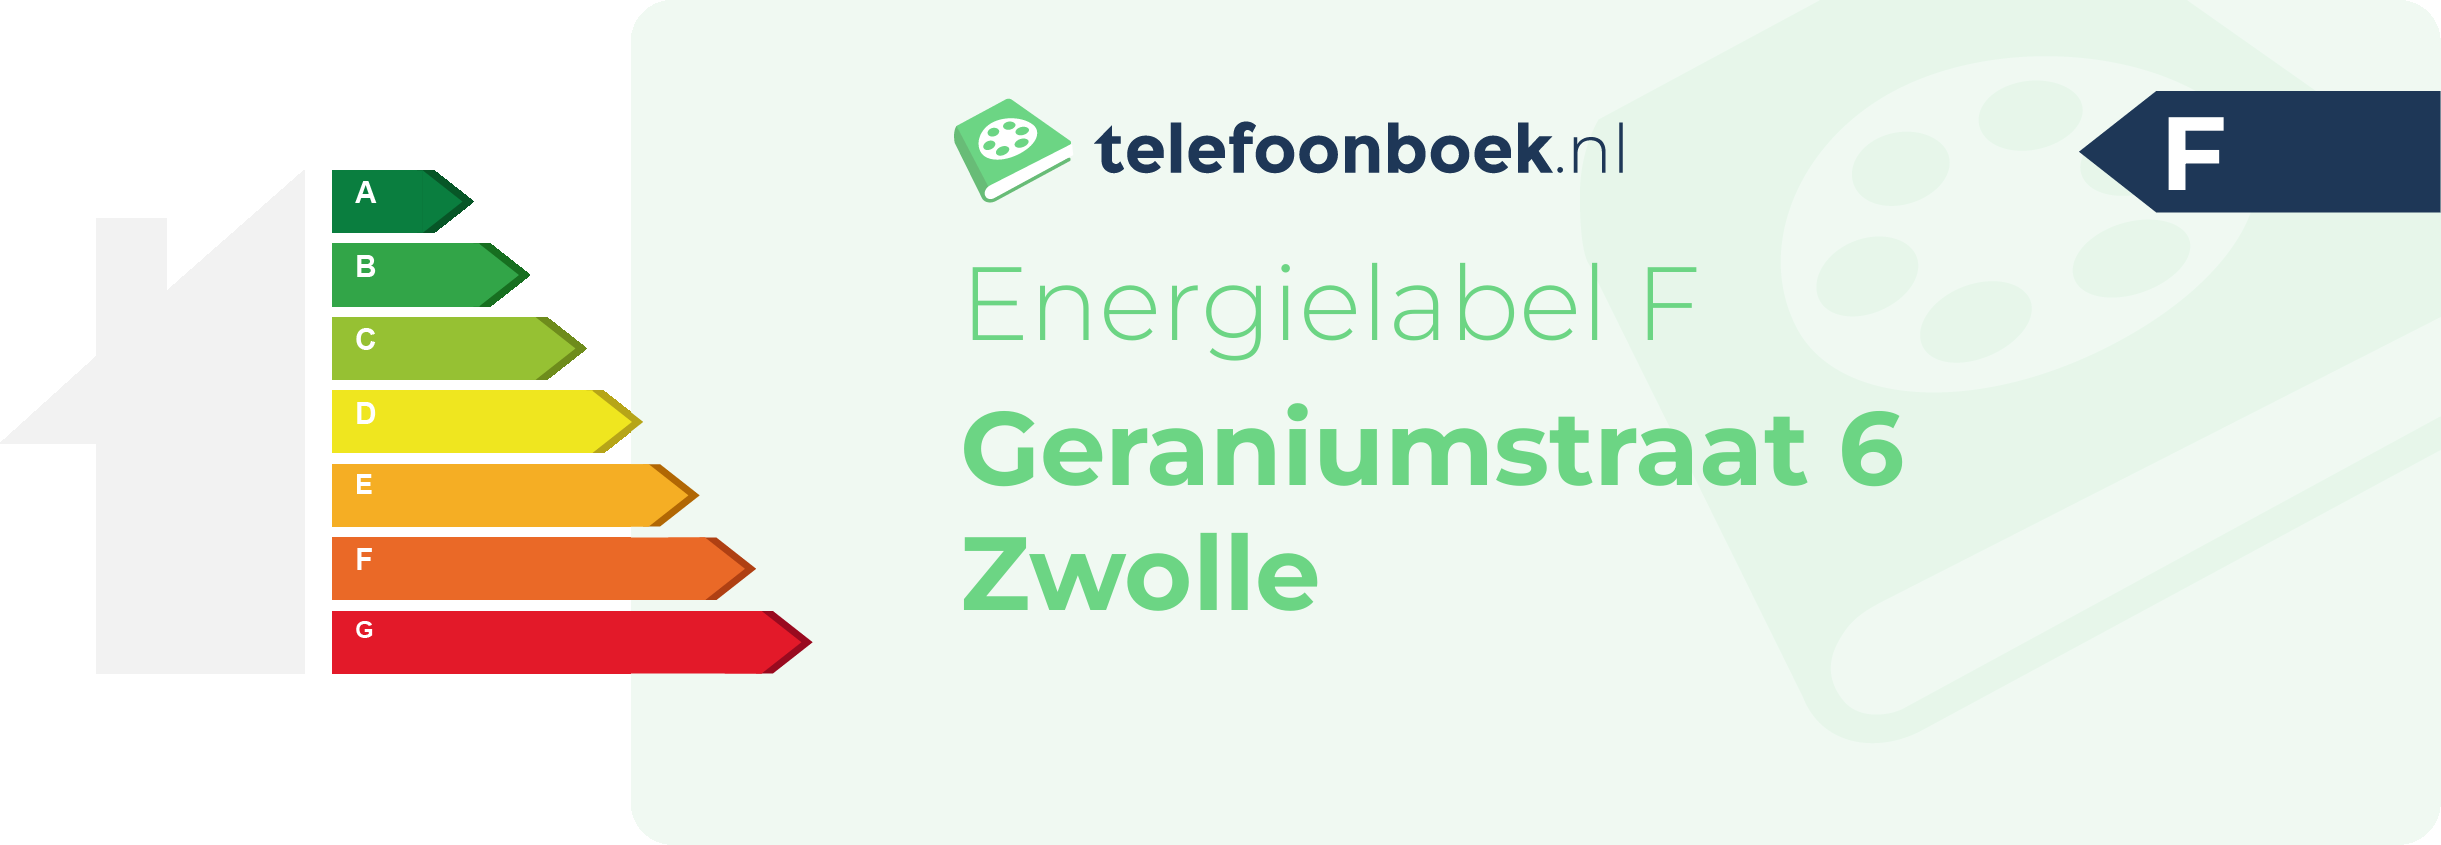 Energielabel Geraniumstraat 6 Zwolle